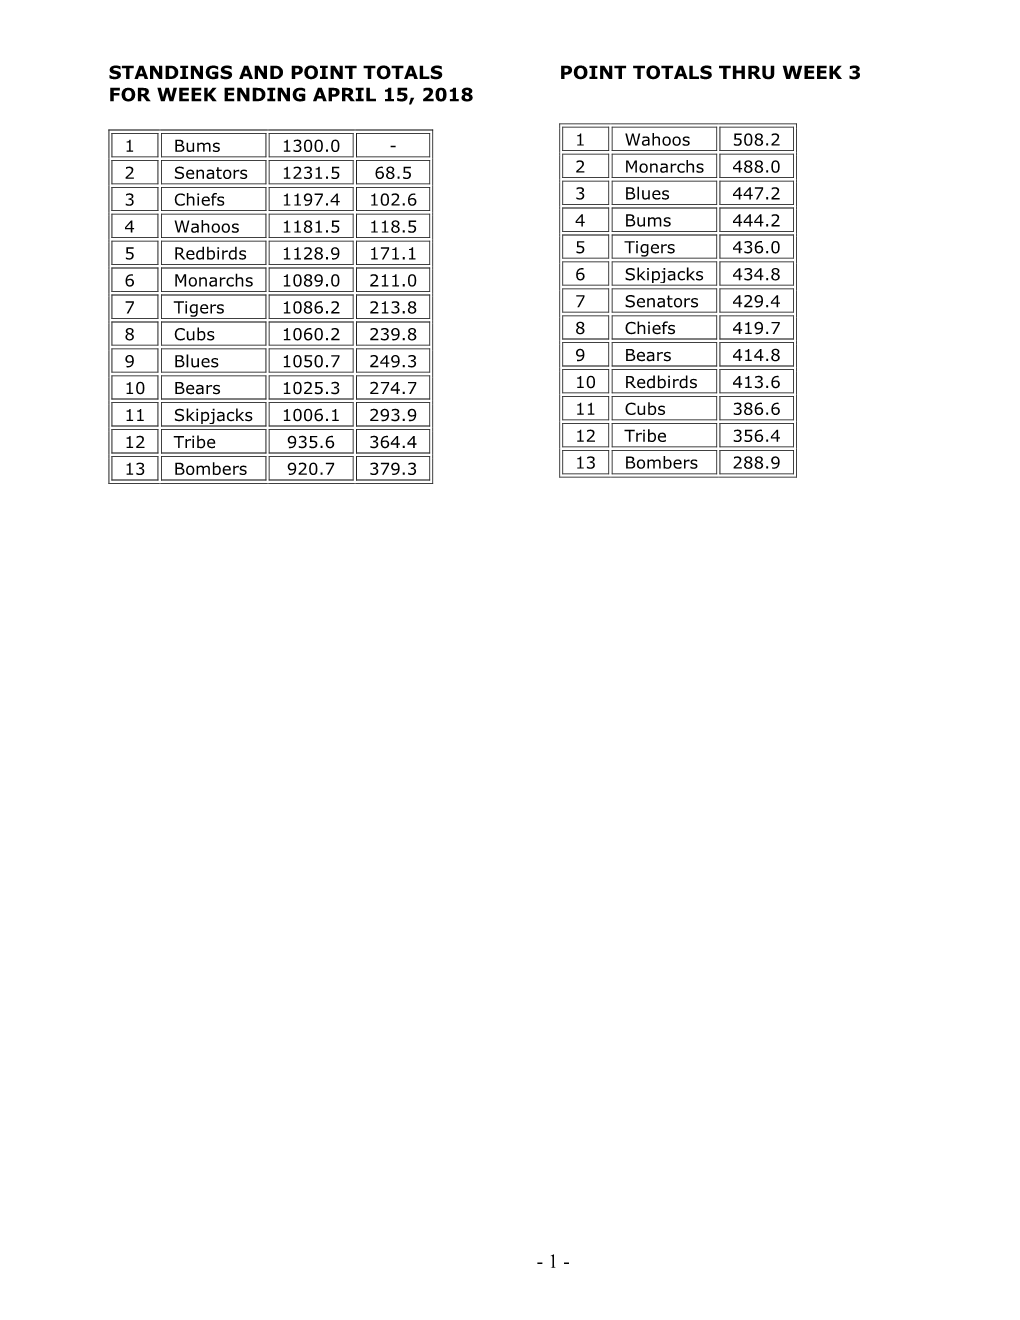 Hsl/Standings and Point Totals Thru Week 3 Ending 4/15/18